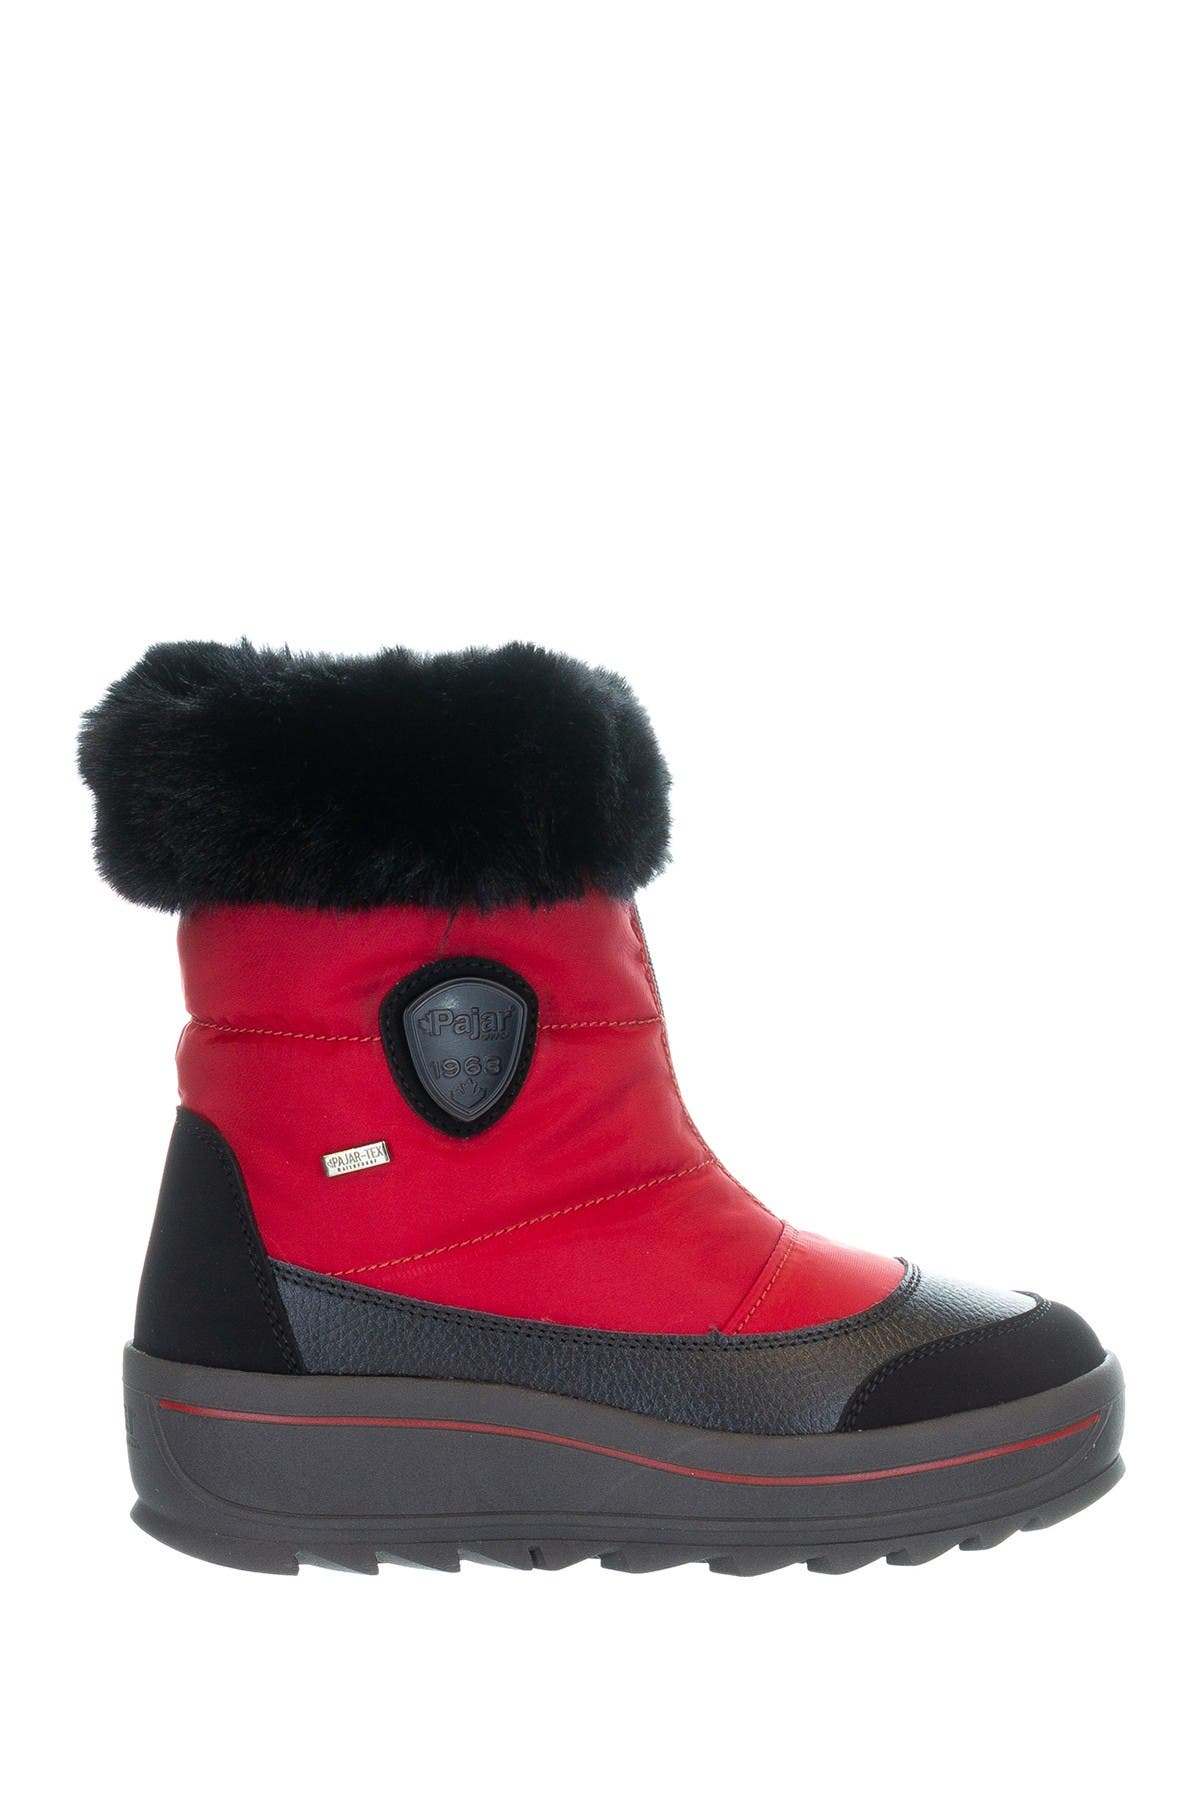 pajar merin waterproof winter boots